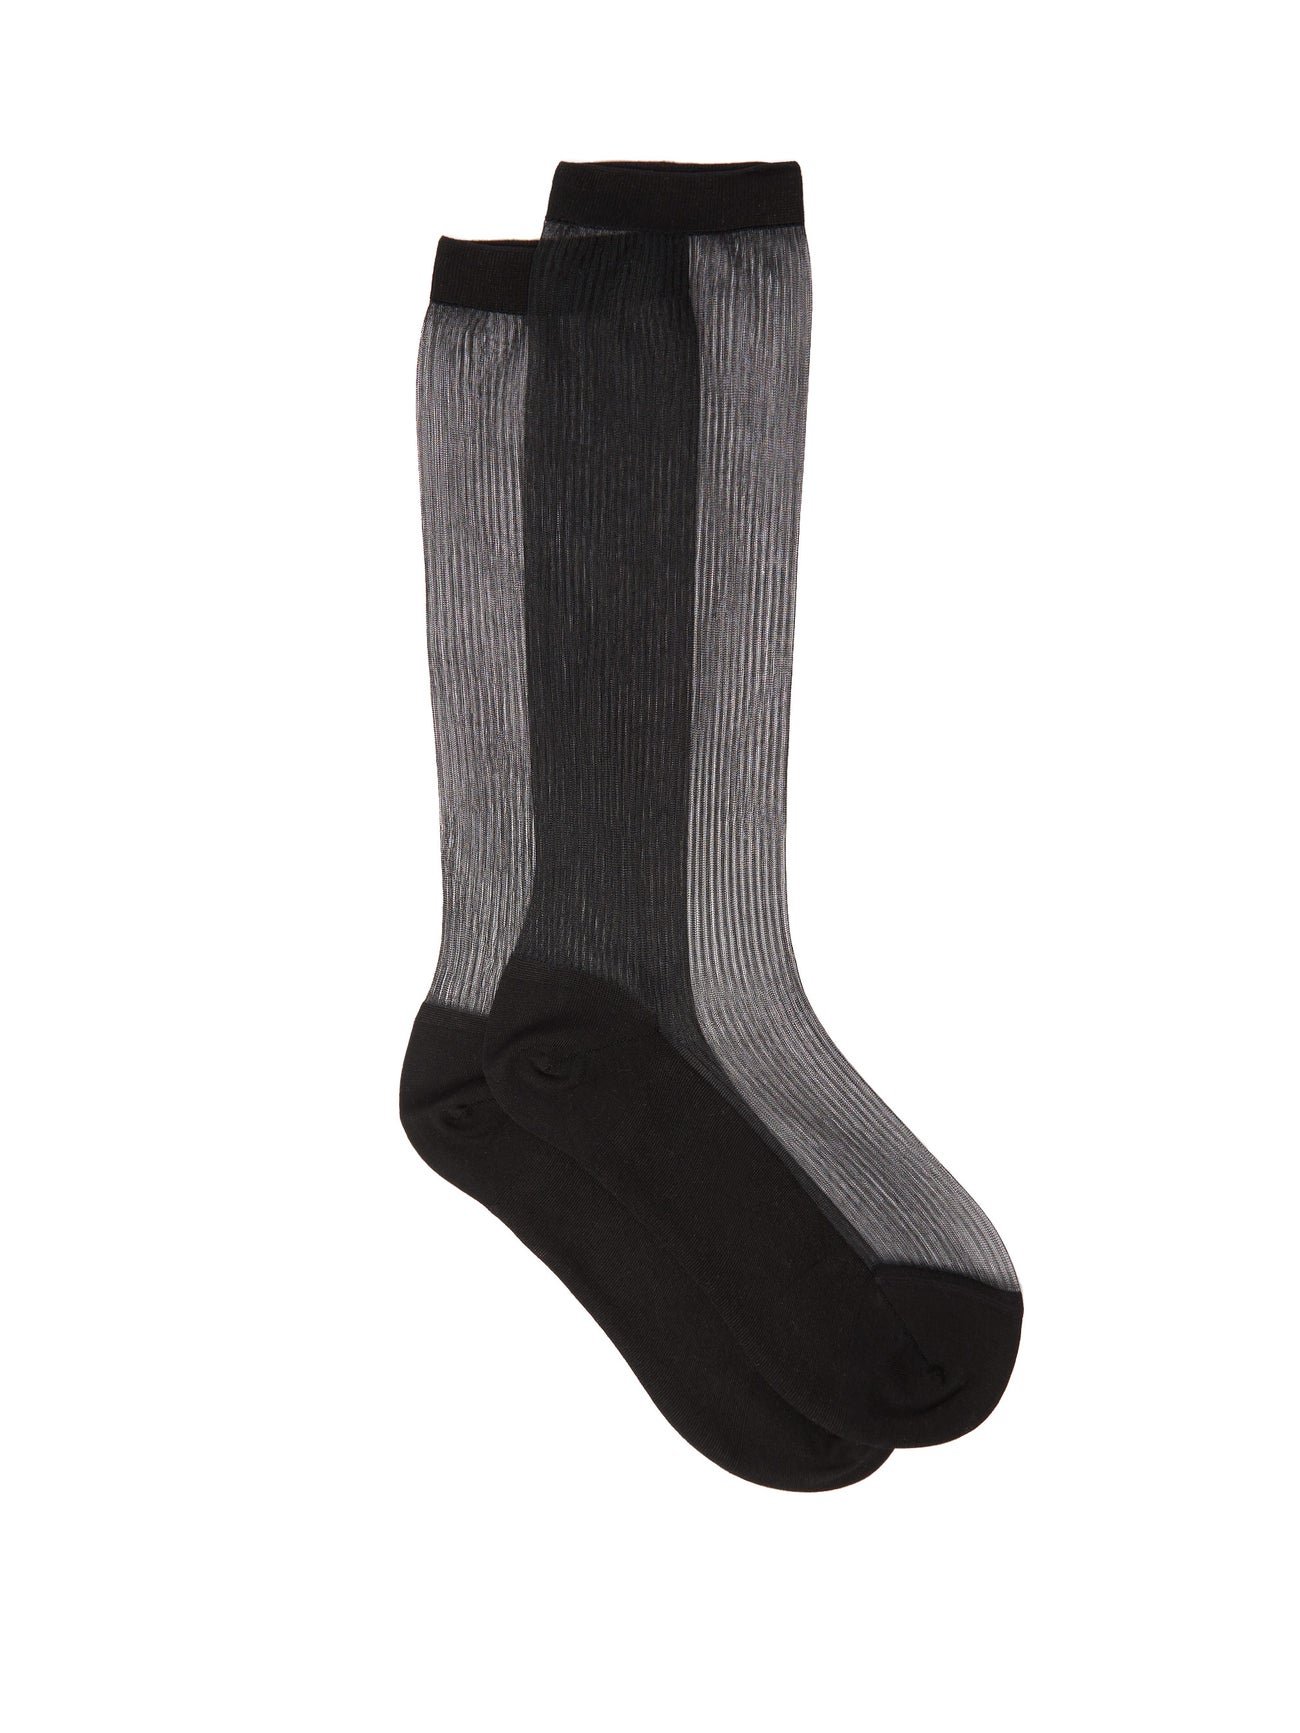 Black Sheer socks, Raey